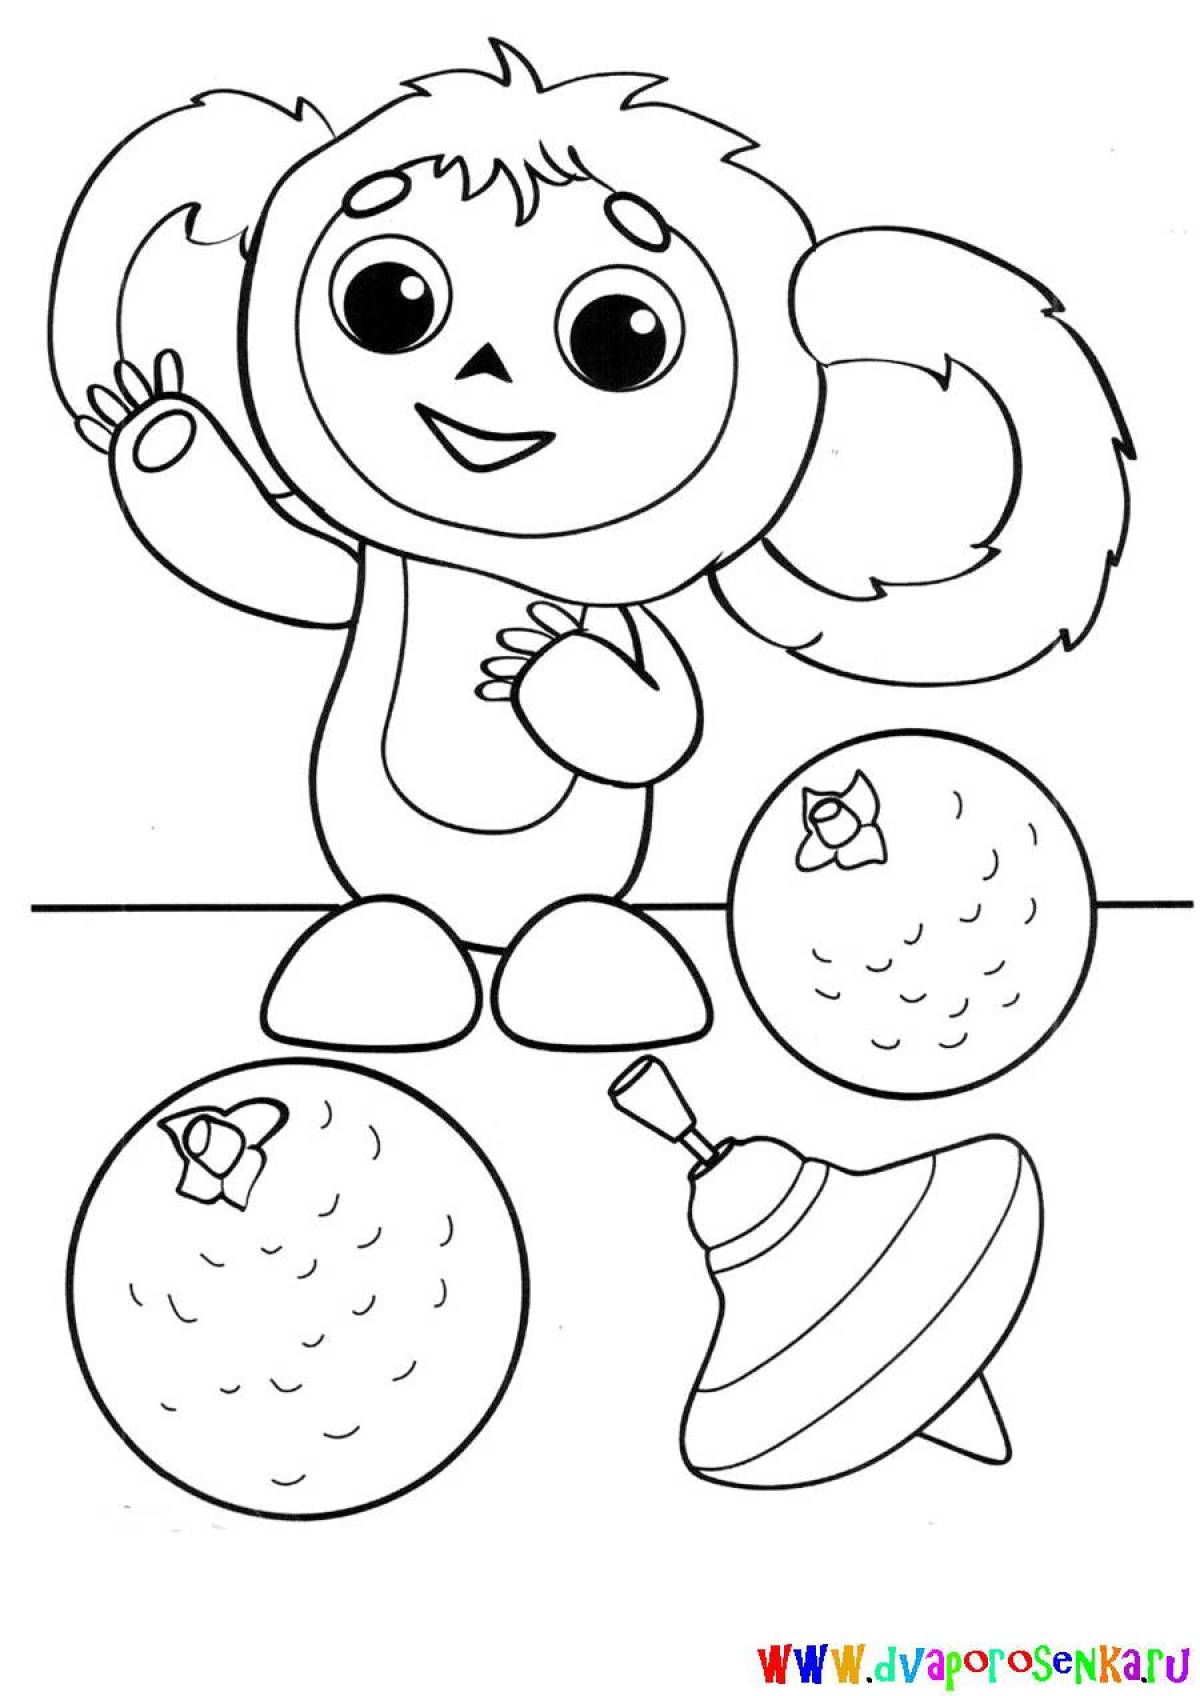 Cheerful cheburashka and gene coloring